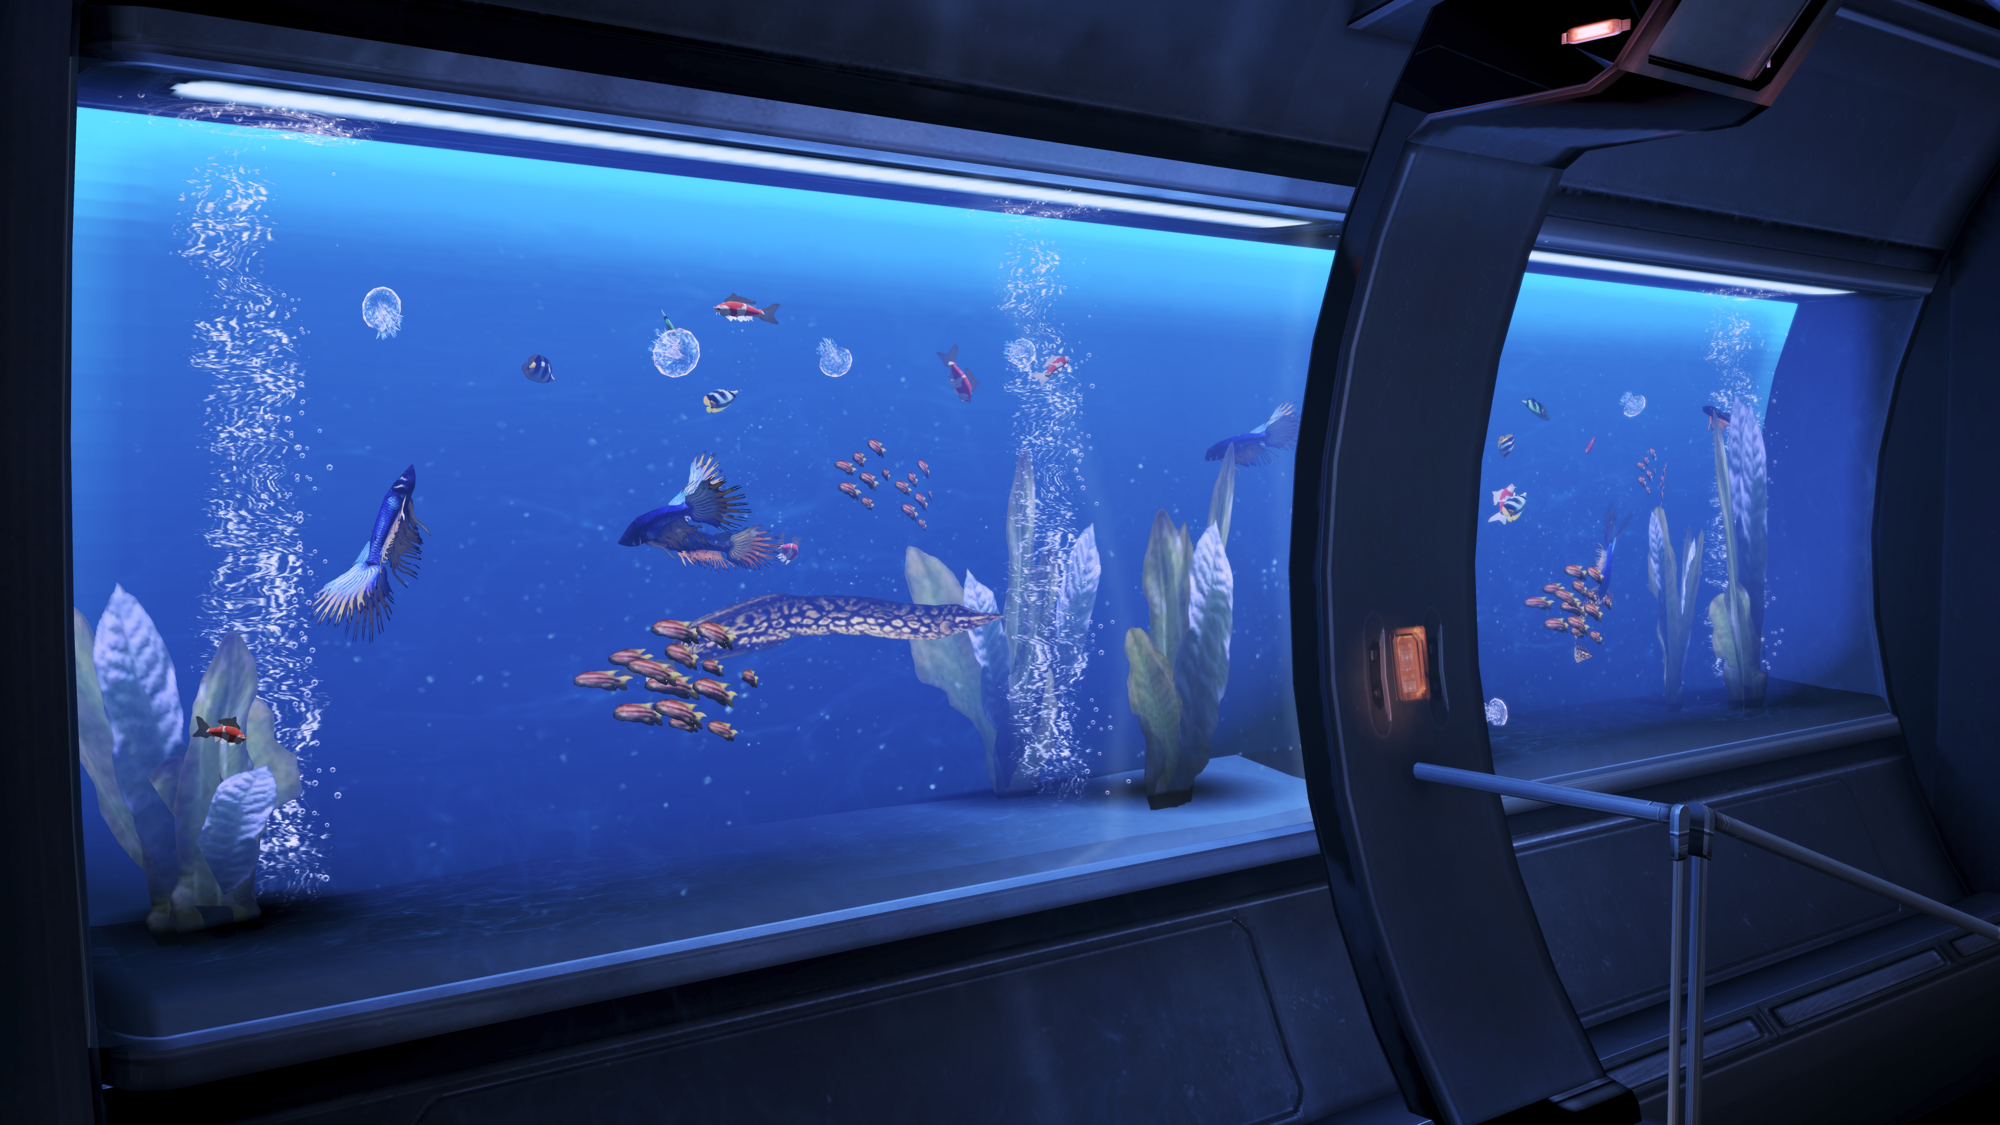 Аквариум Mass Effect. Масс эффект аквариум. Большой аквариум. Океанариум комната. Большом аквариуме рыбок 10